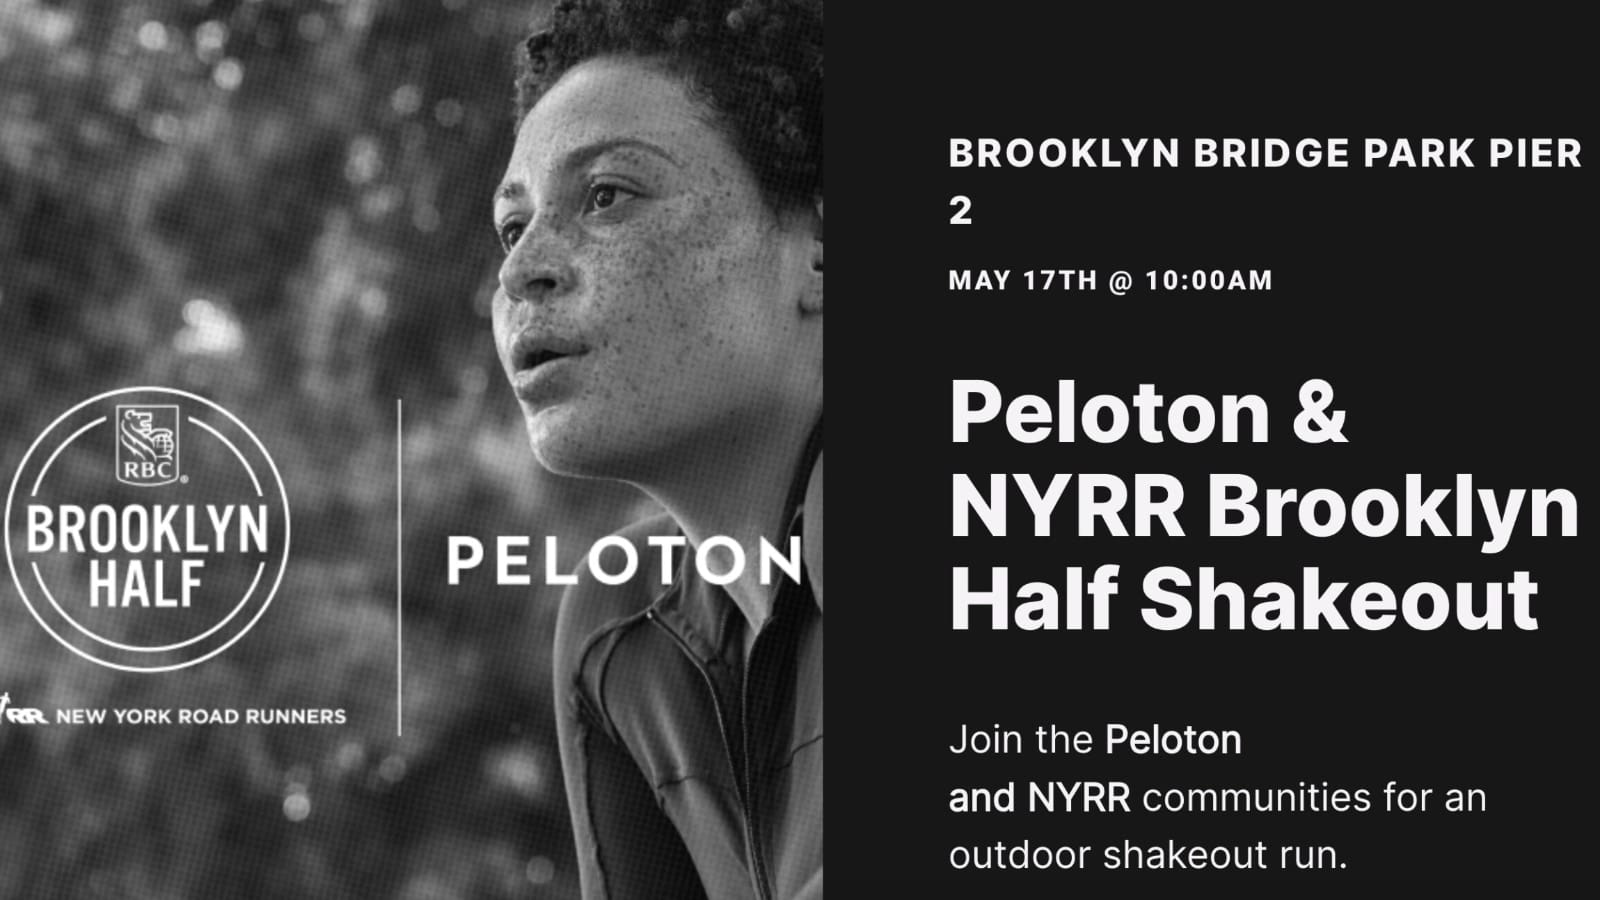  Brooklyn Half Shakeout Run event website